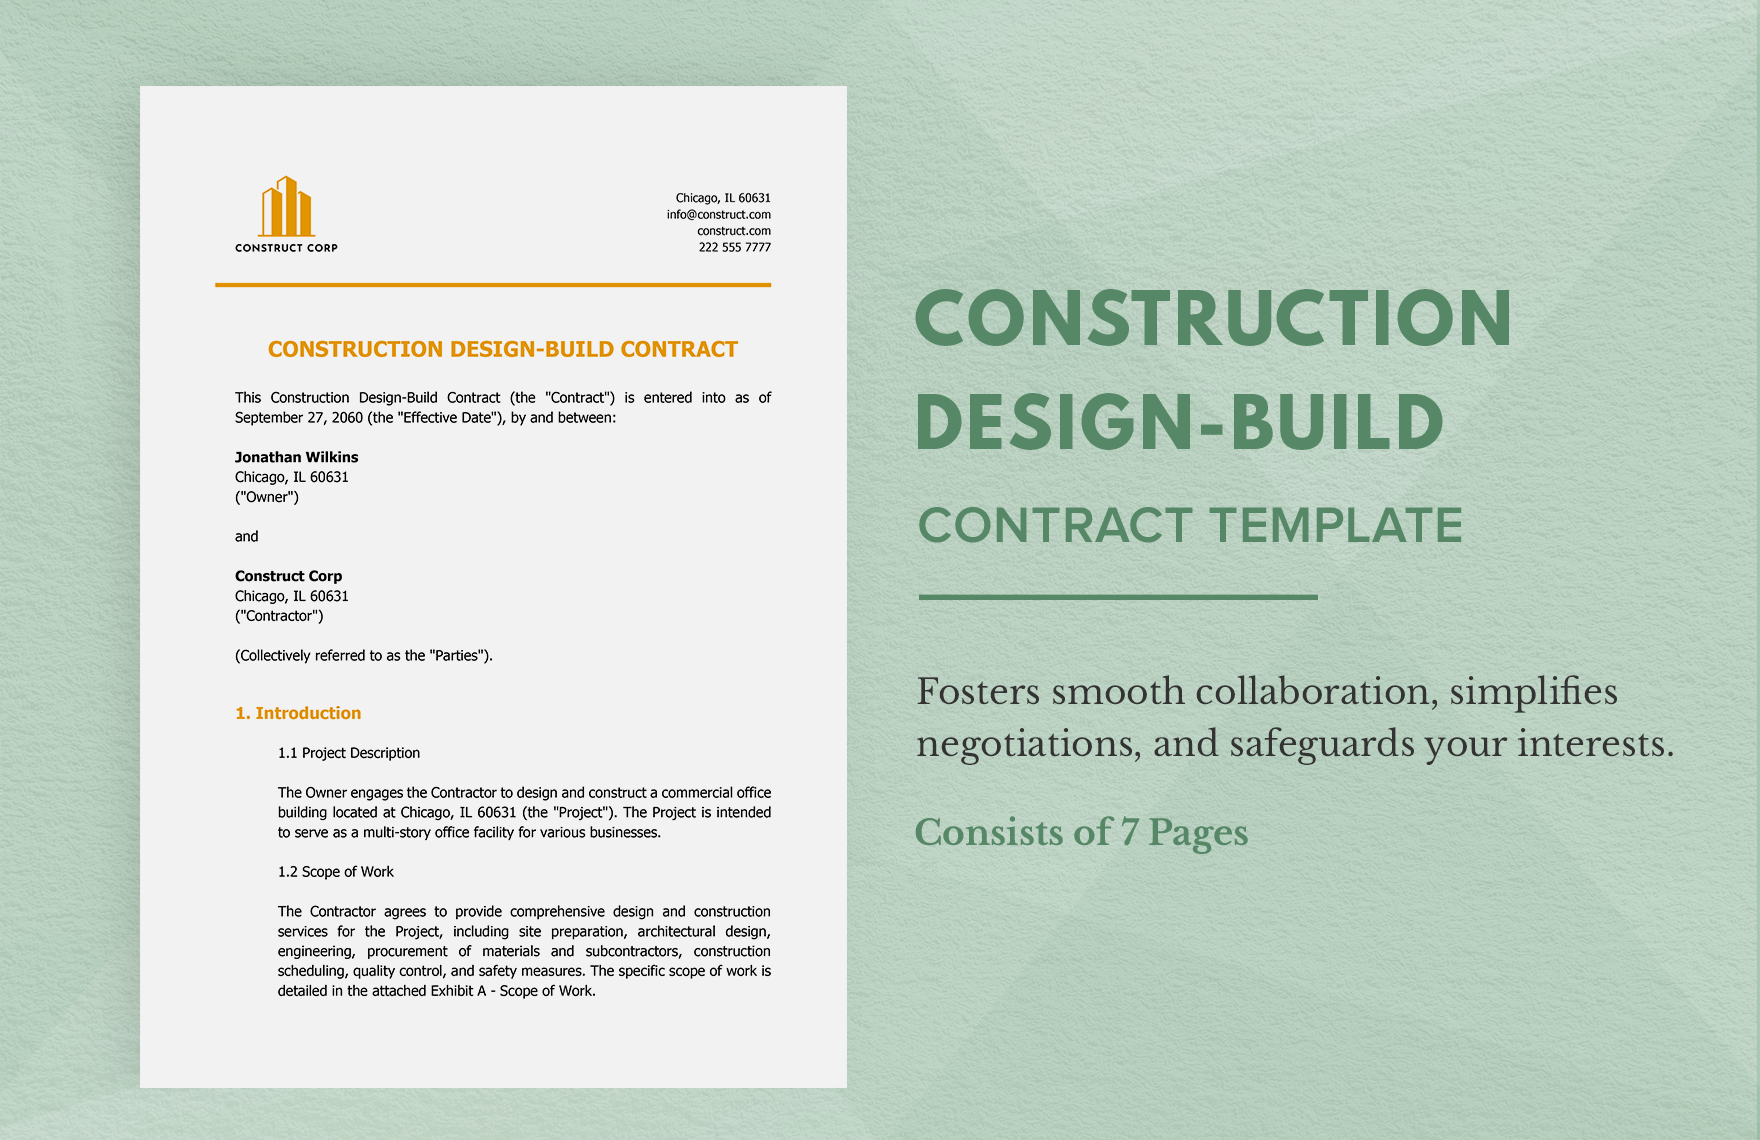 Construction Design-Build Contract Template